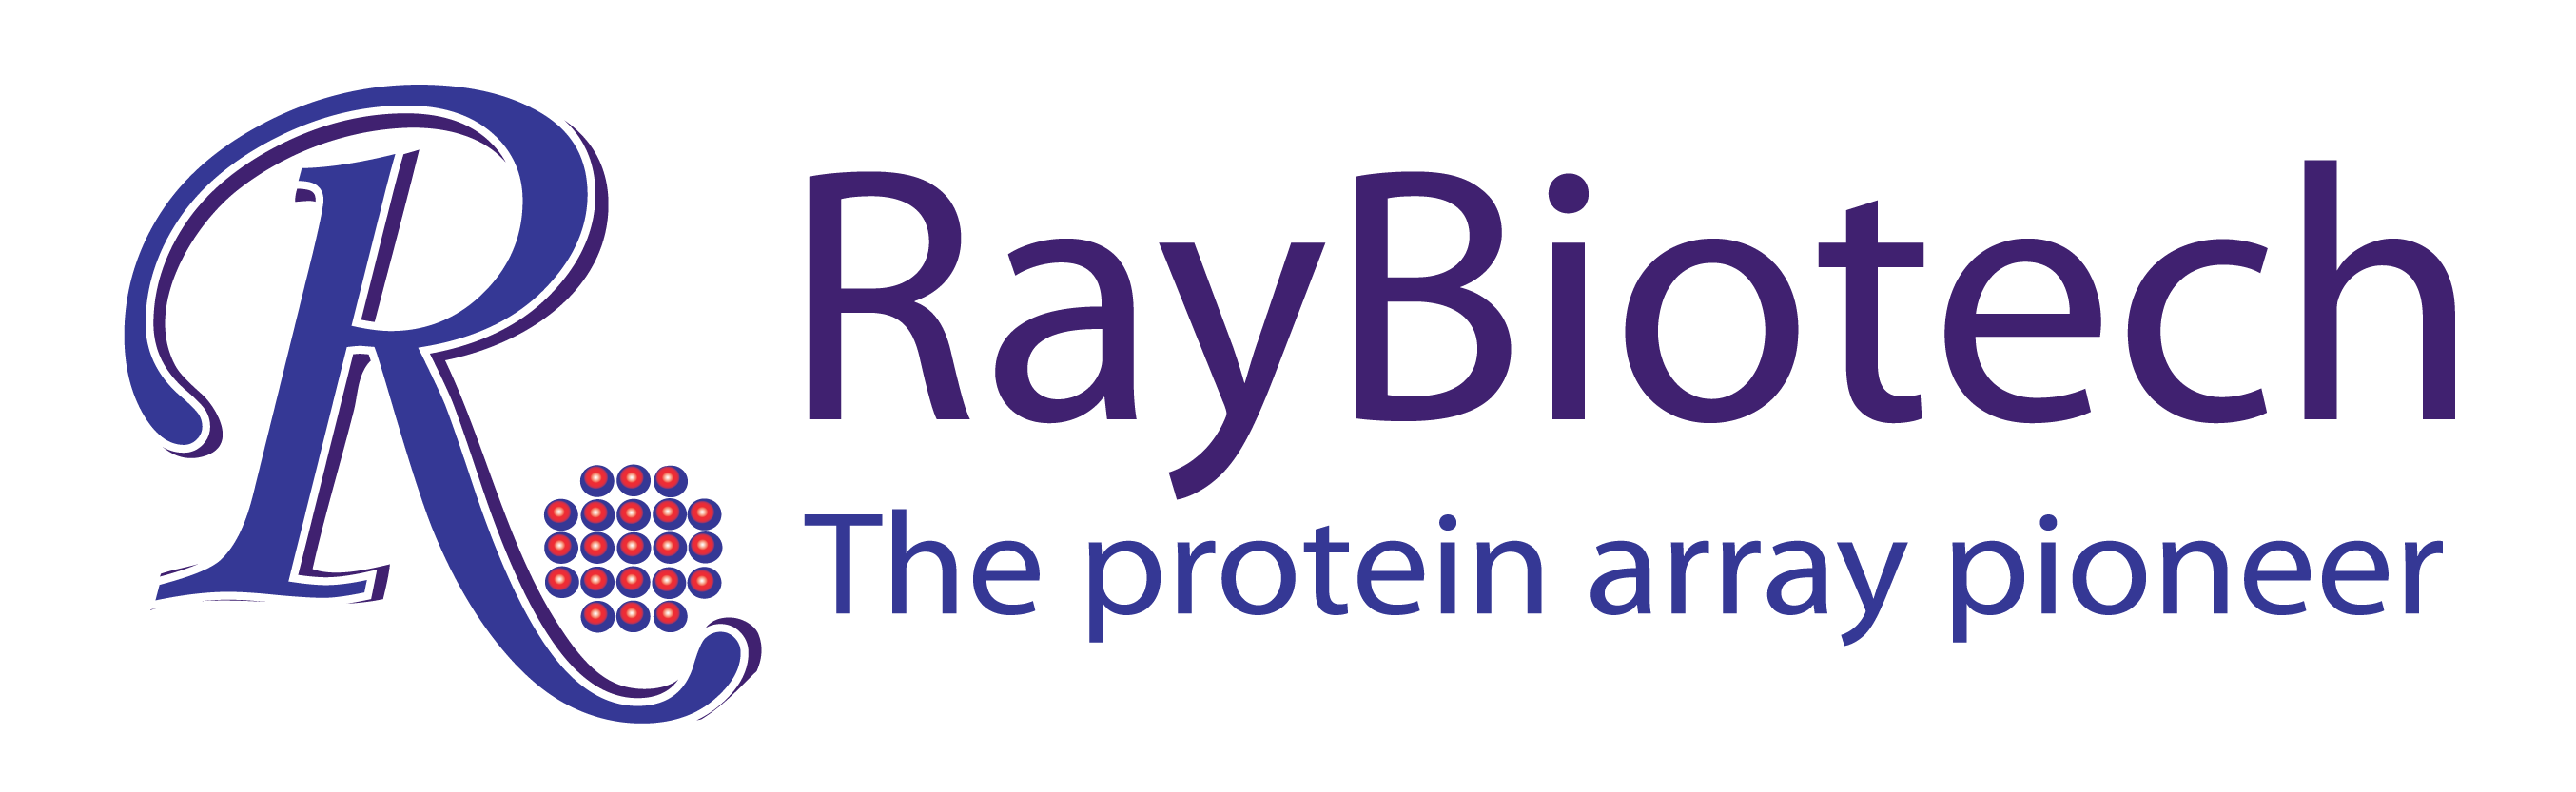 RayBiotech logo